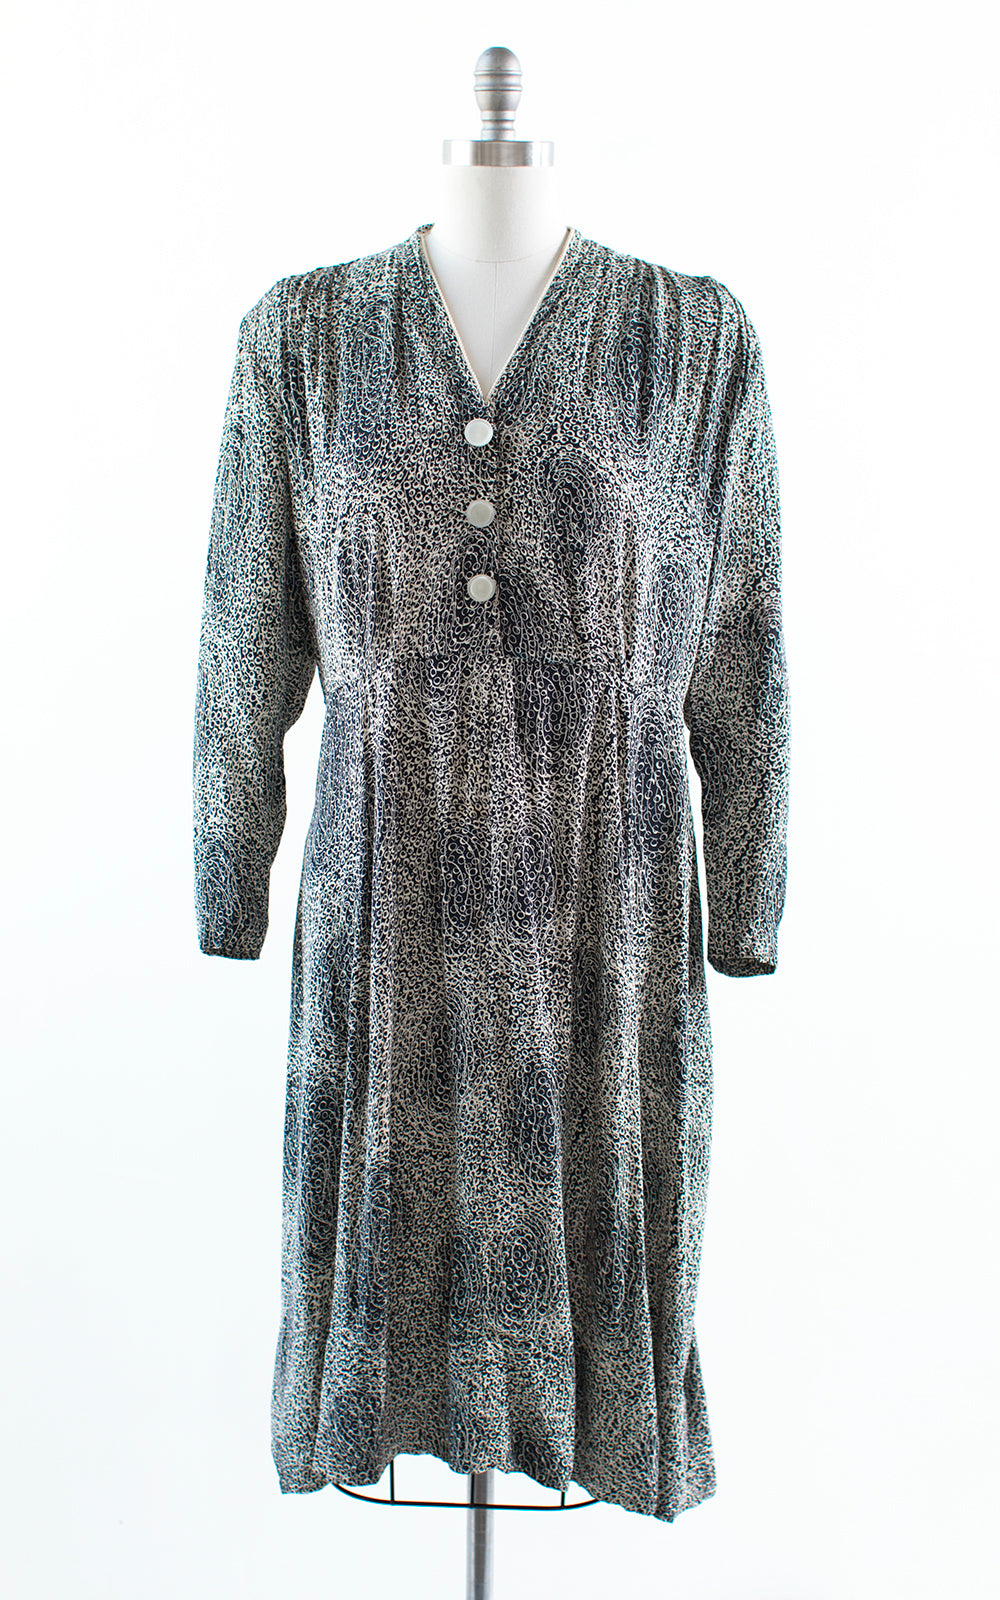 1940s Polka Dot Moon Printed Rayon Dress | x-large